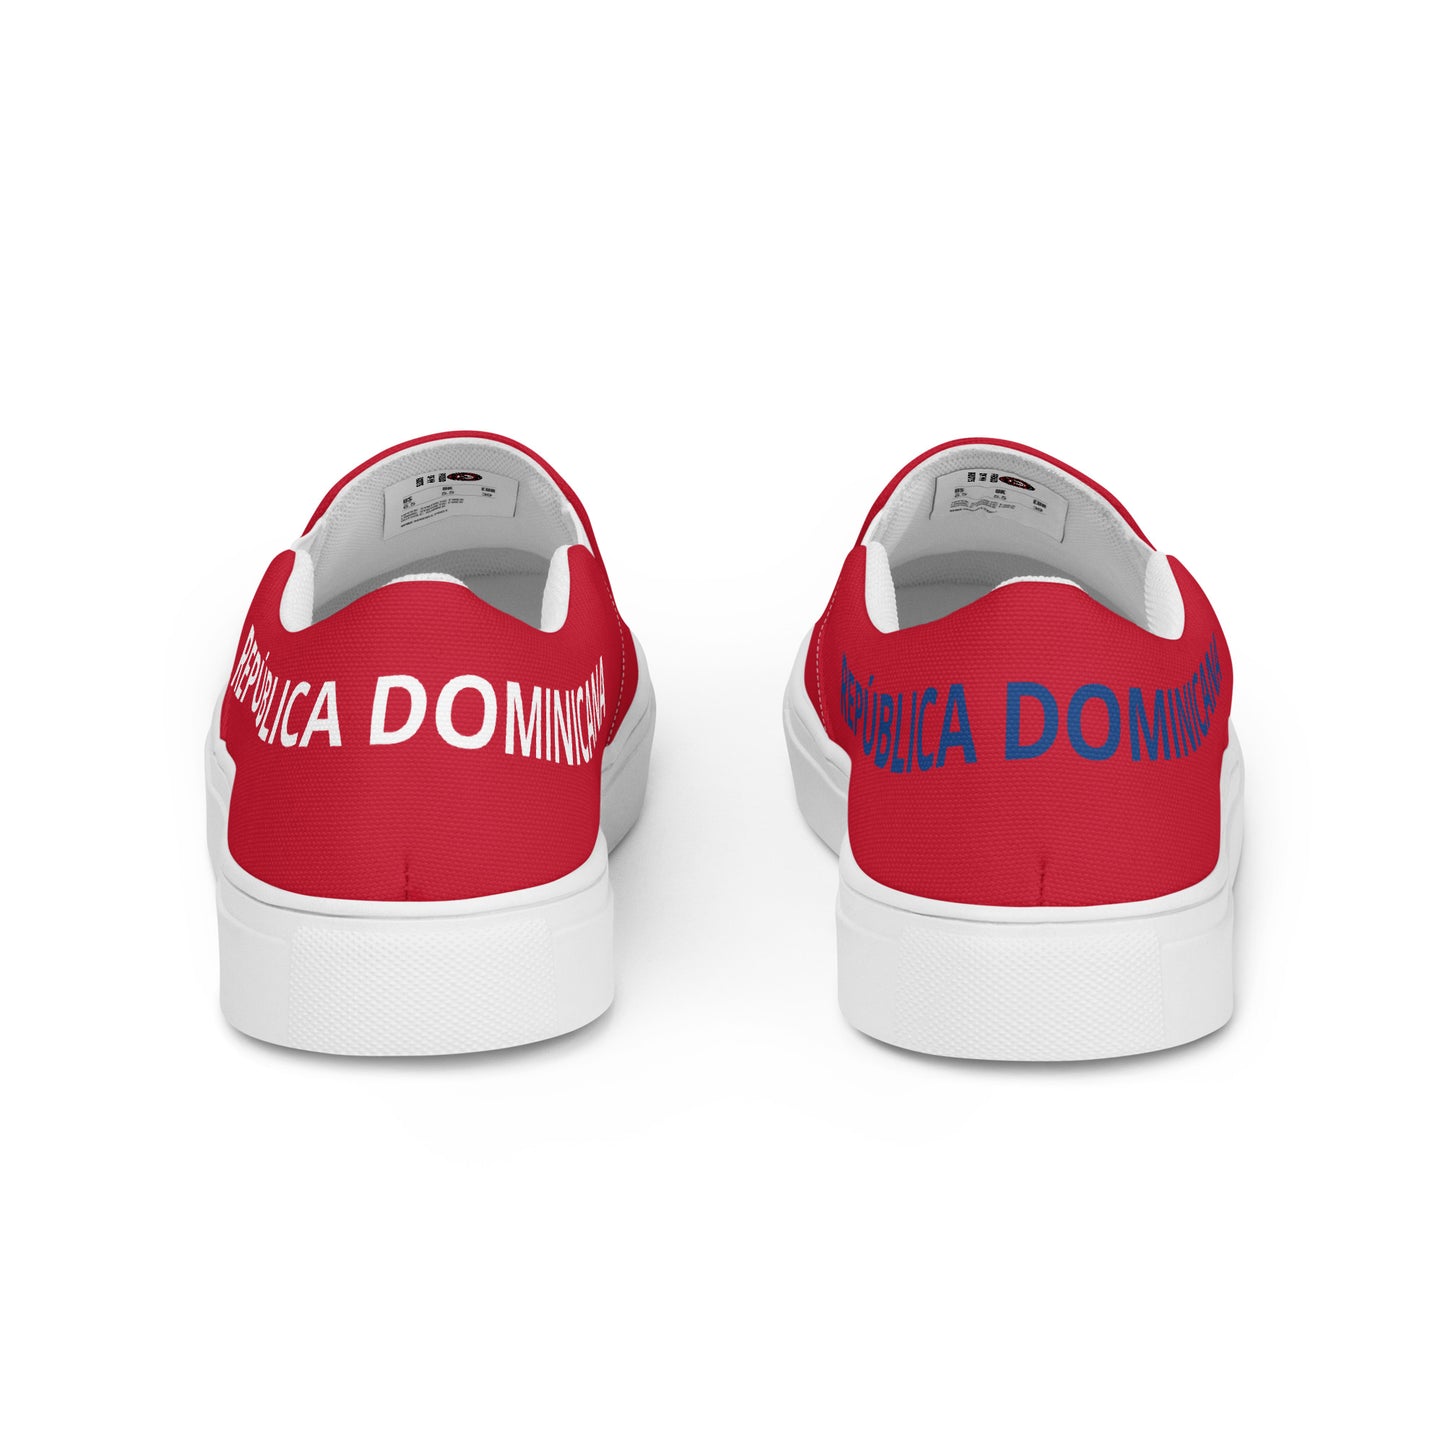 República Dominicana - Women - Red - Slip-on shoes